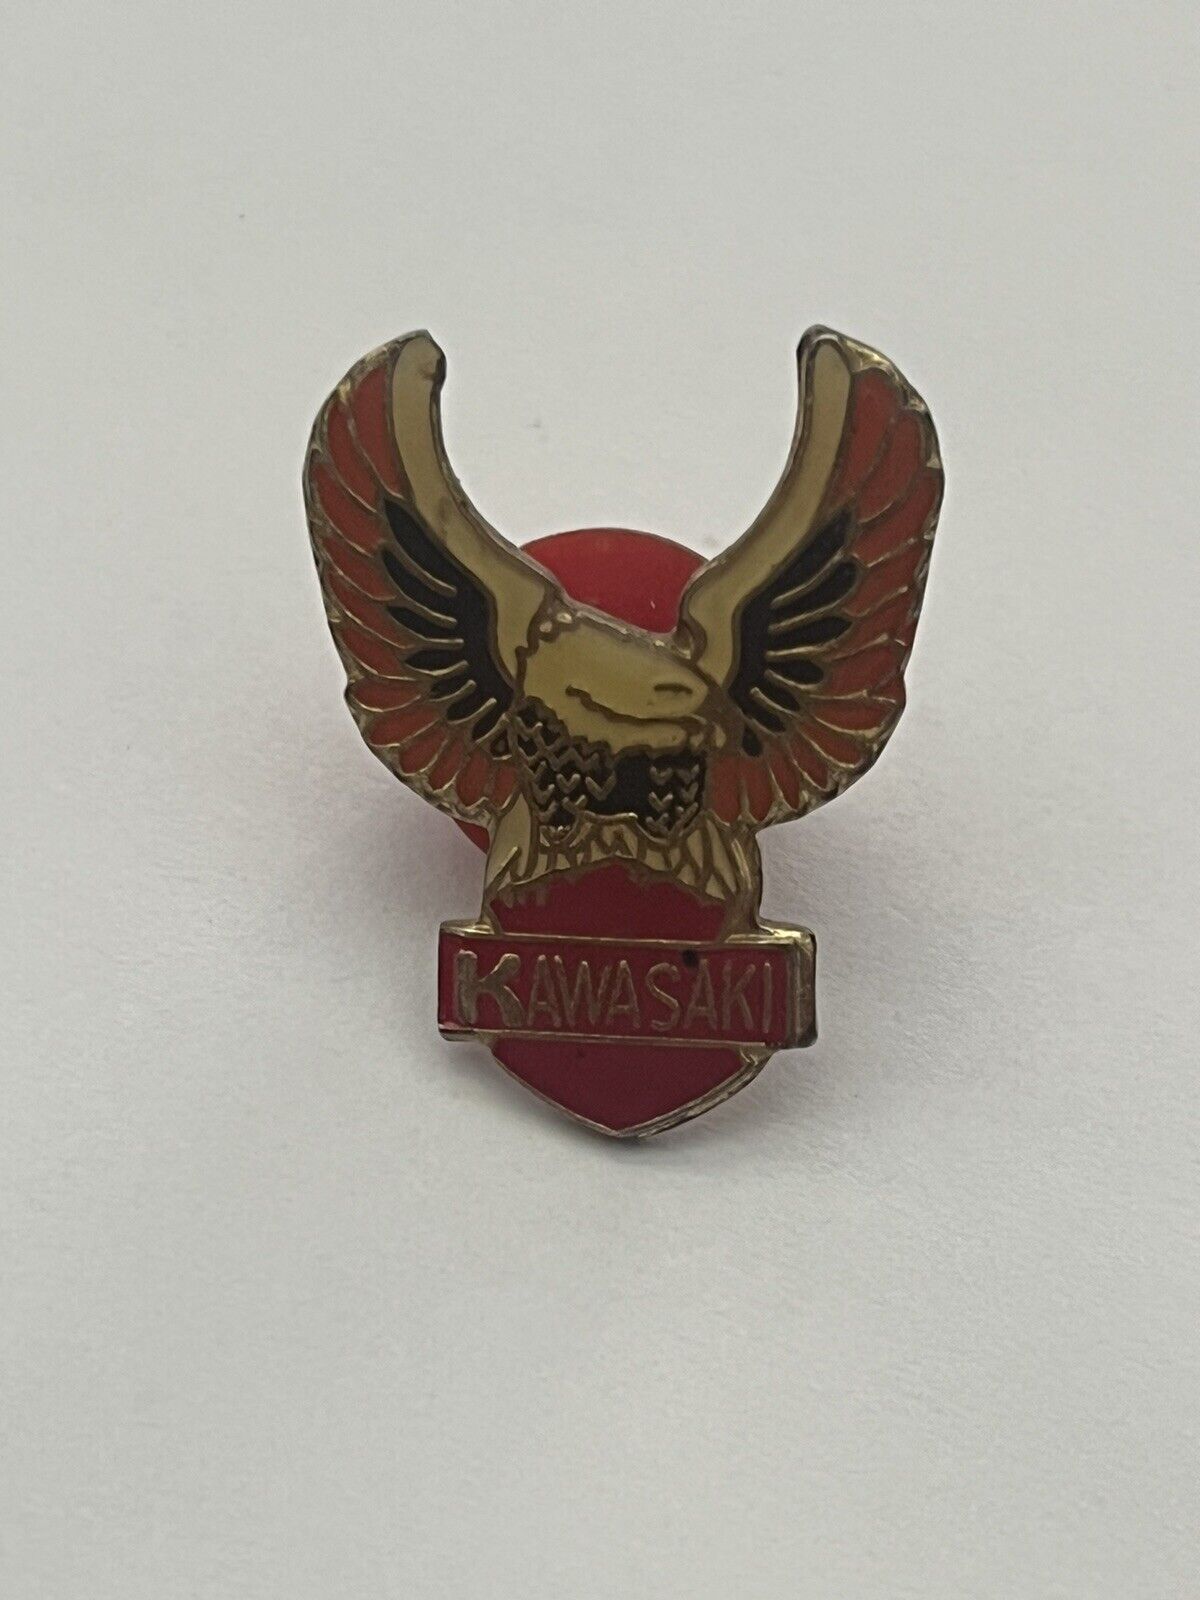 Kawasaki Motorcycle Emblem Pin Eagle With Logo Vintage Original Brassy Gold Tone